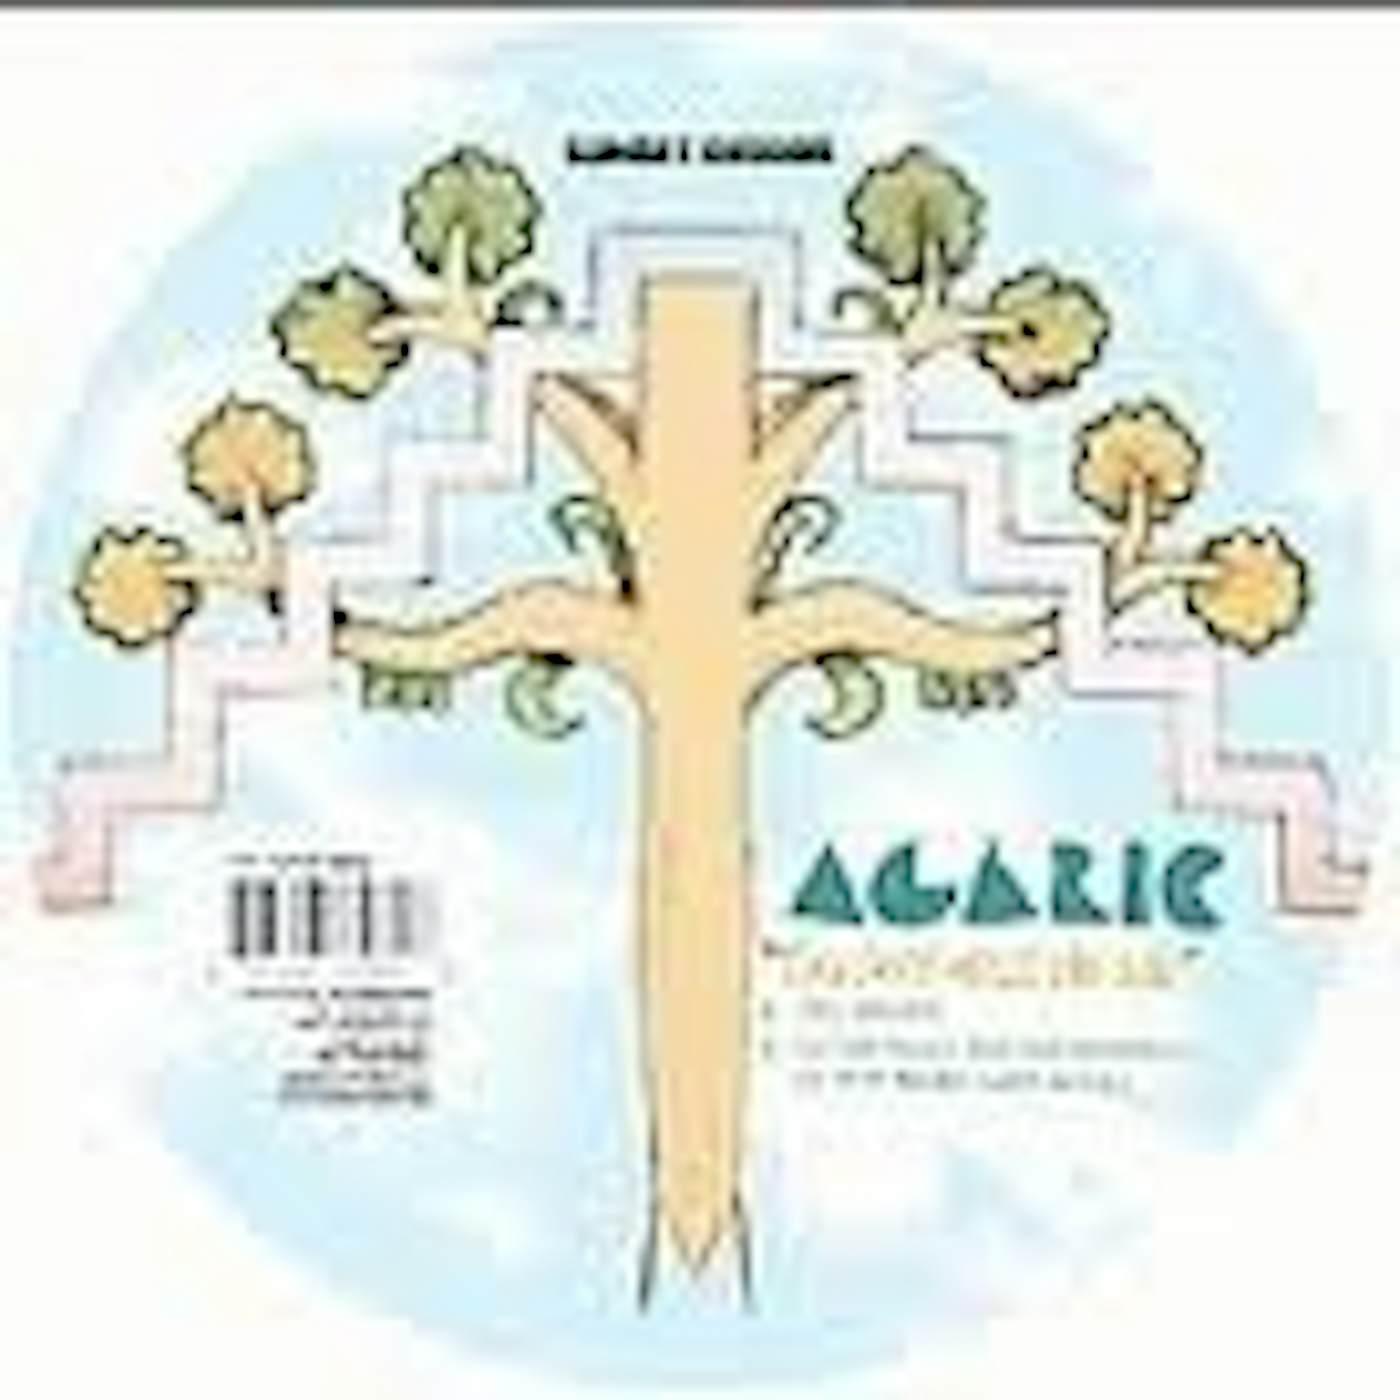 Agaric DARK HOLDS THE SUN Vinyl Record